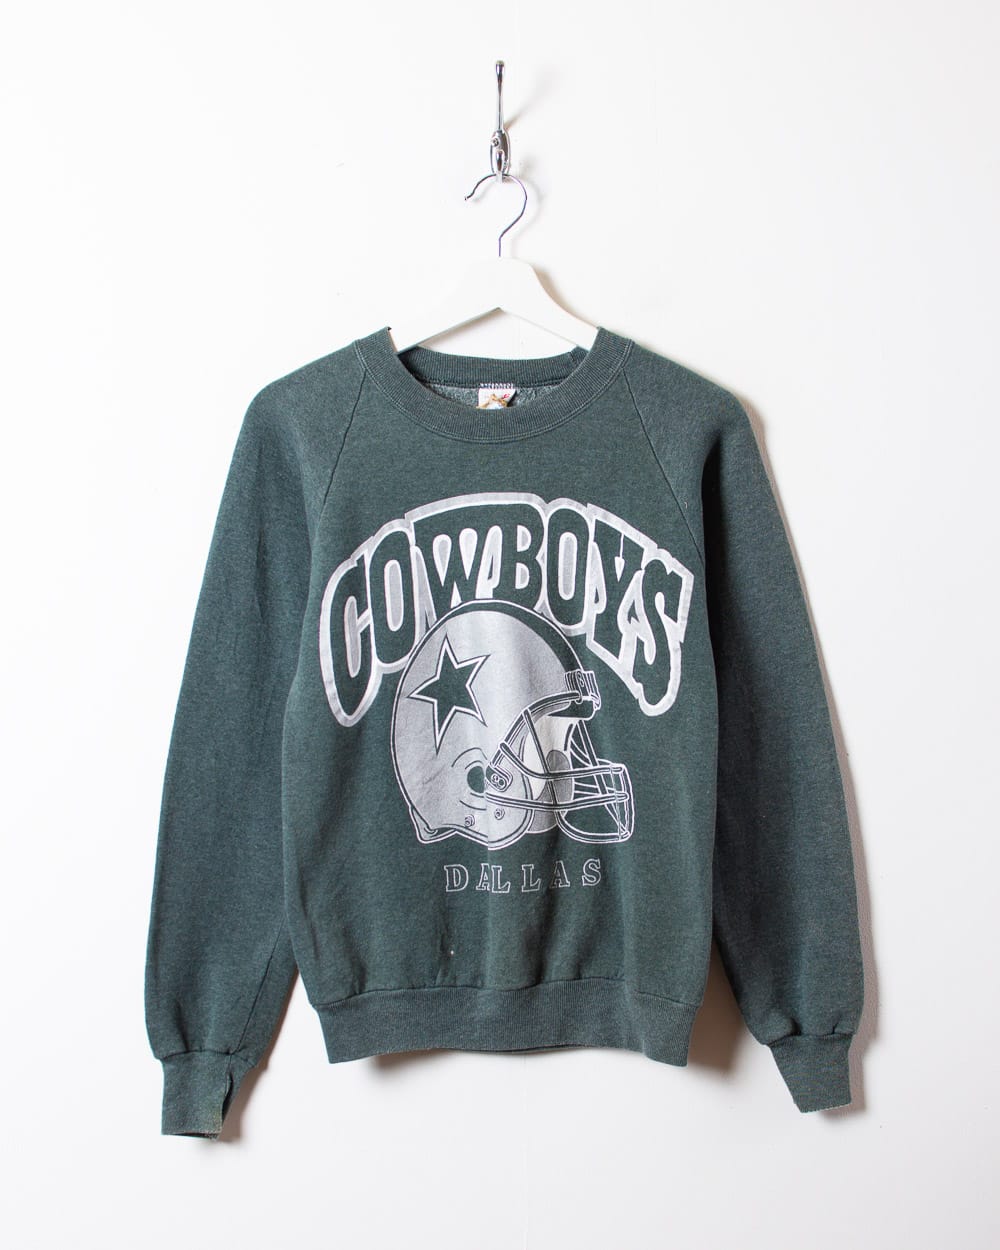 NFL Dallas Cowboys Embroidered Womens Crewneck Sweatshirt